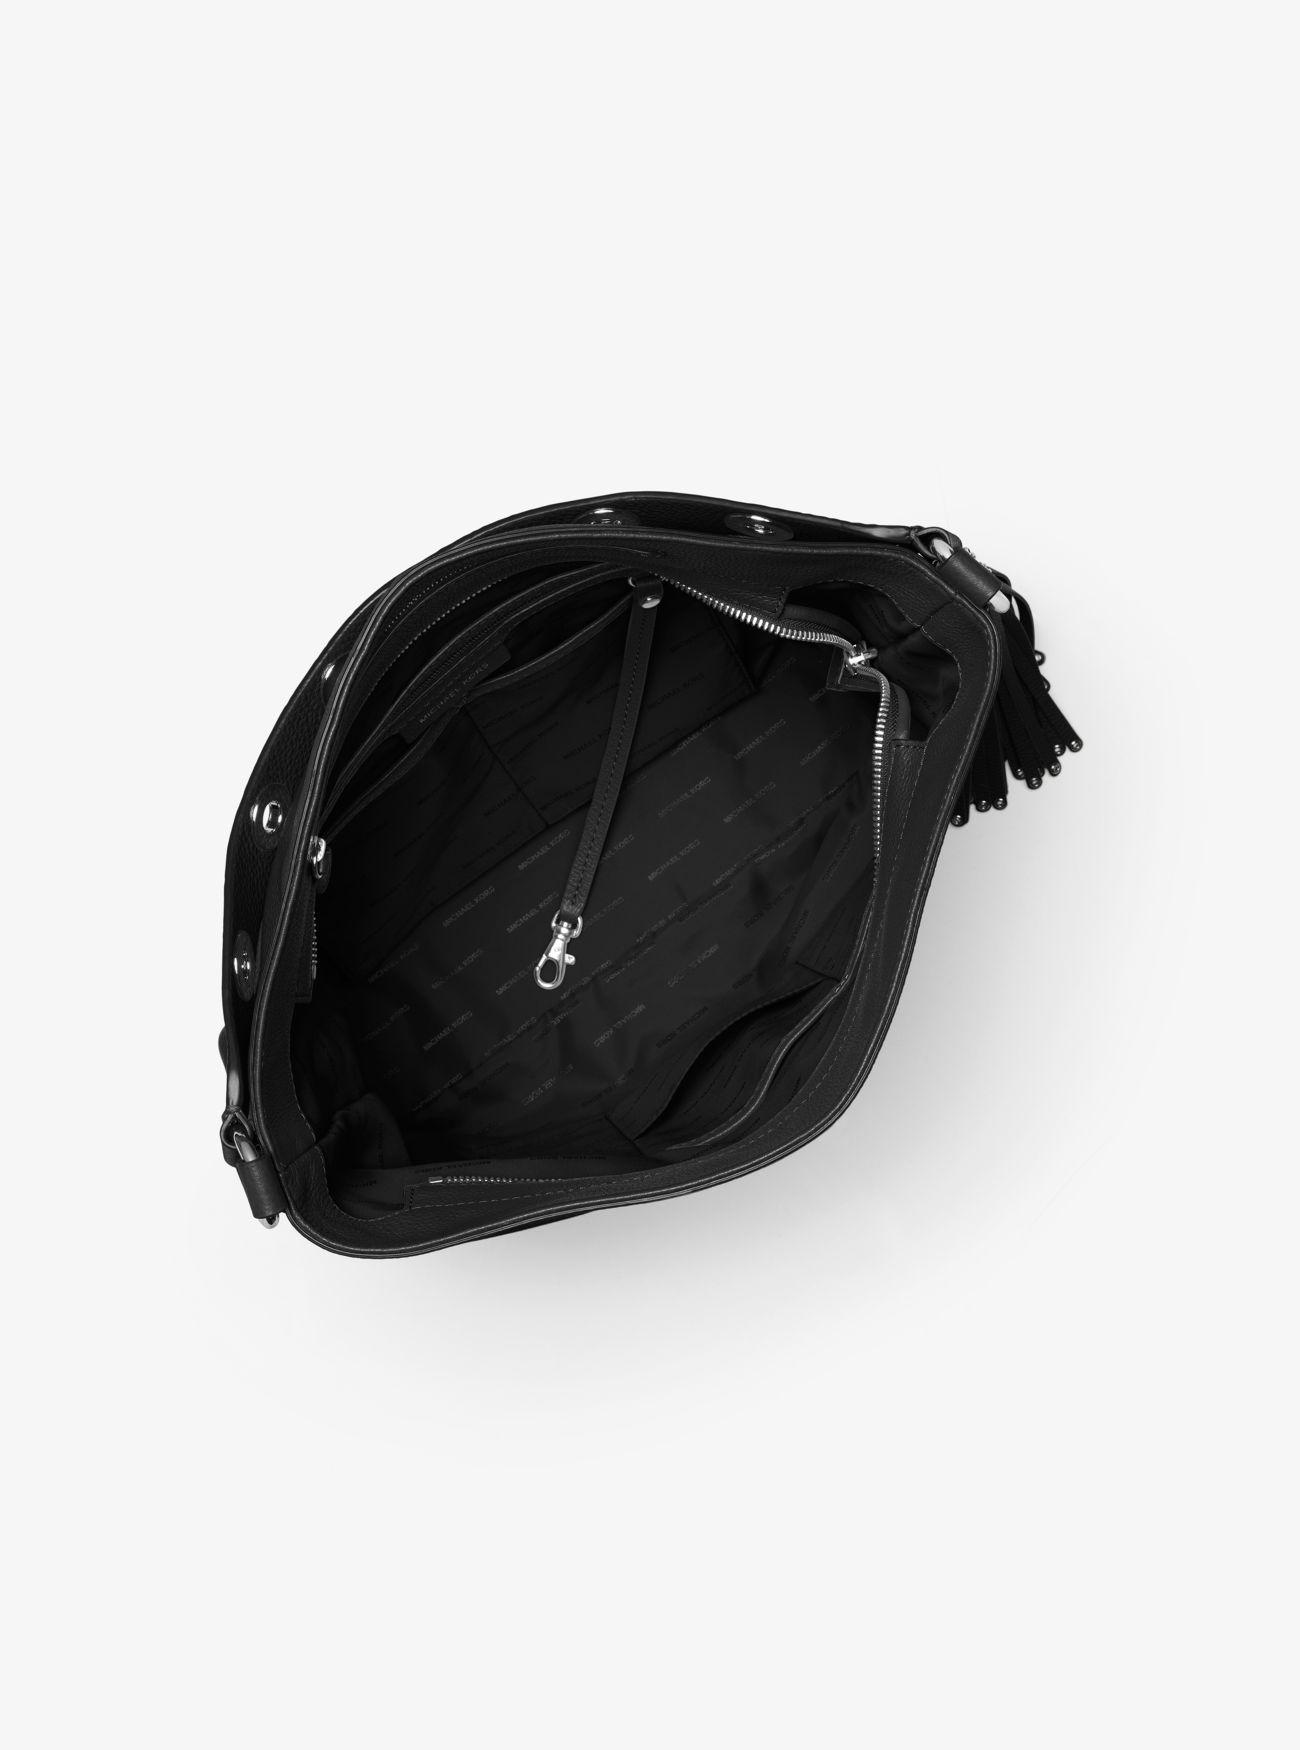 Michael Kors Brooklyn Large Leather Shoulder Bag in Black - Lyst